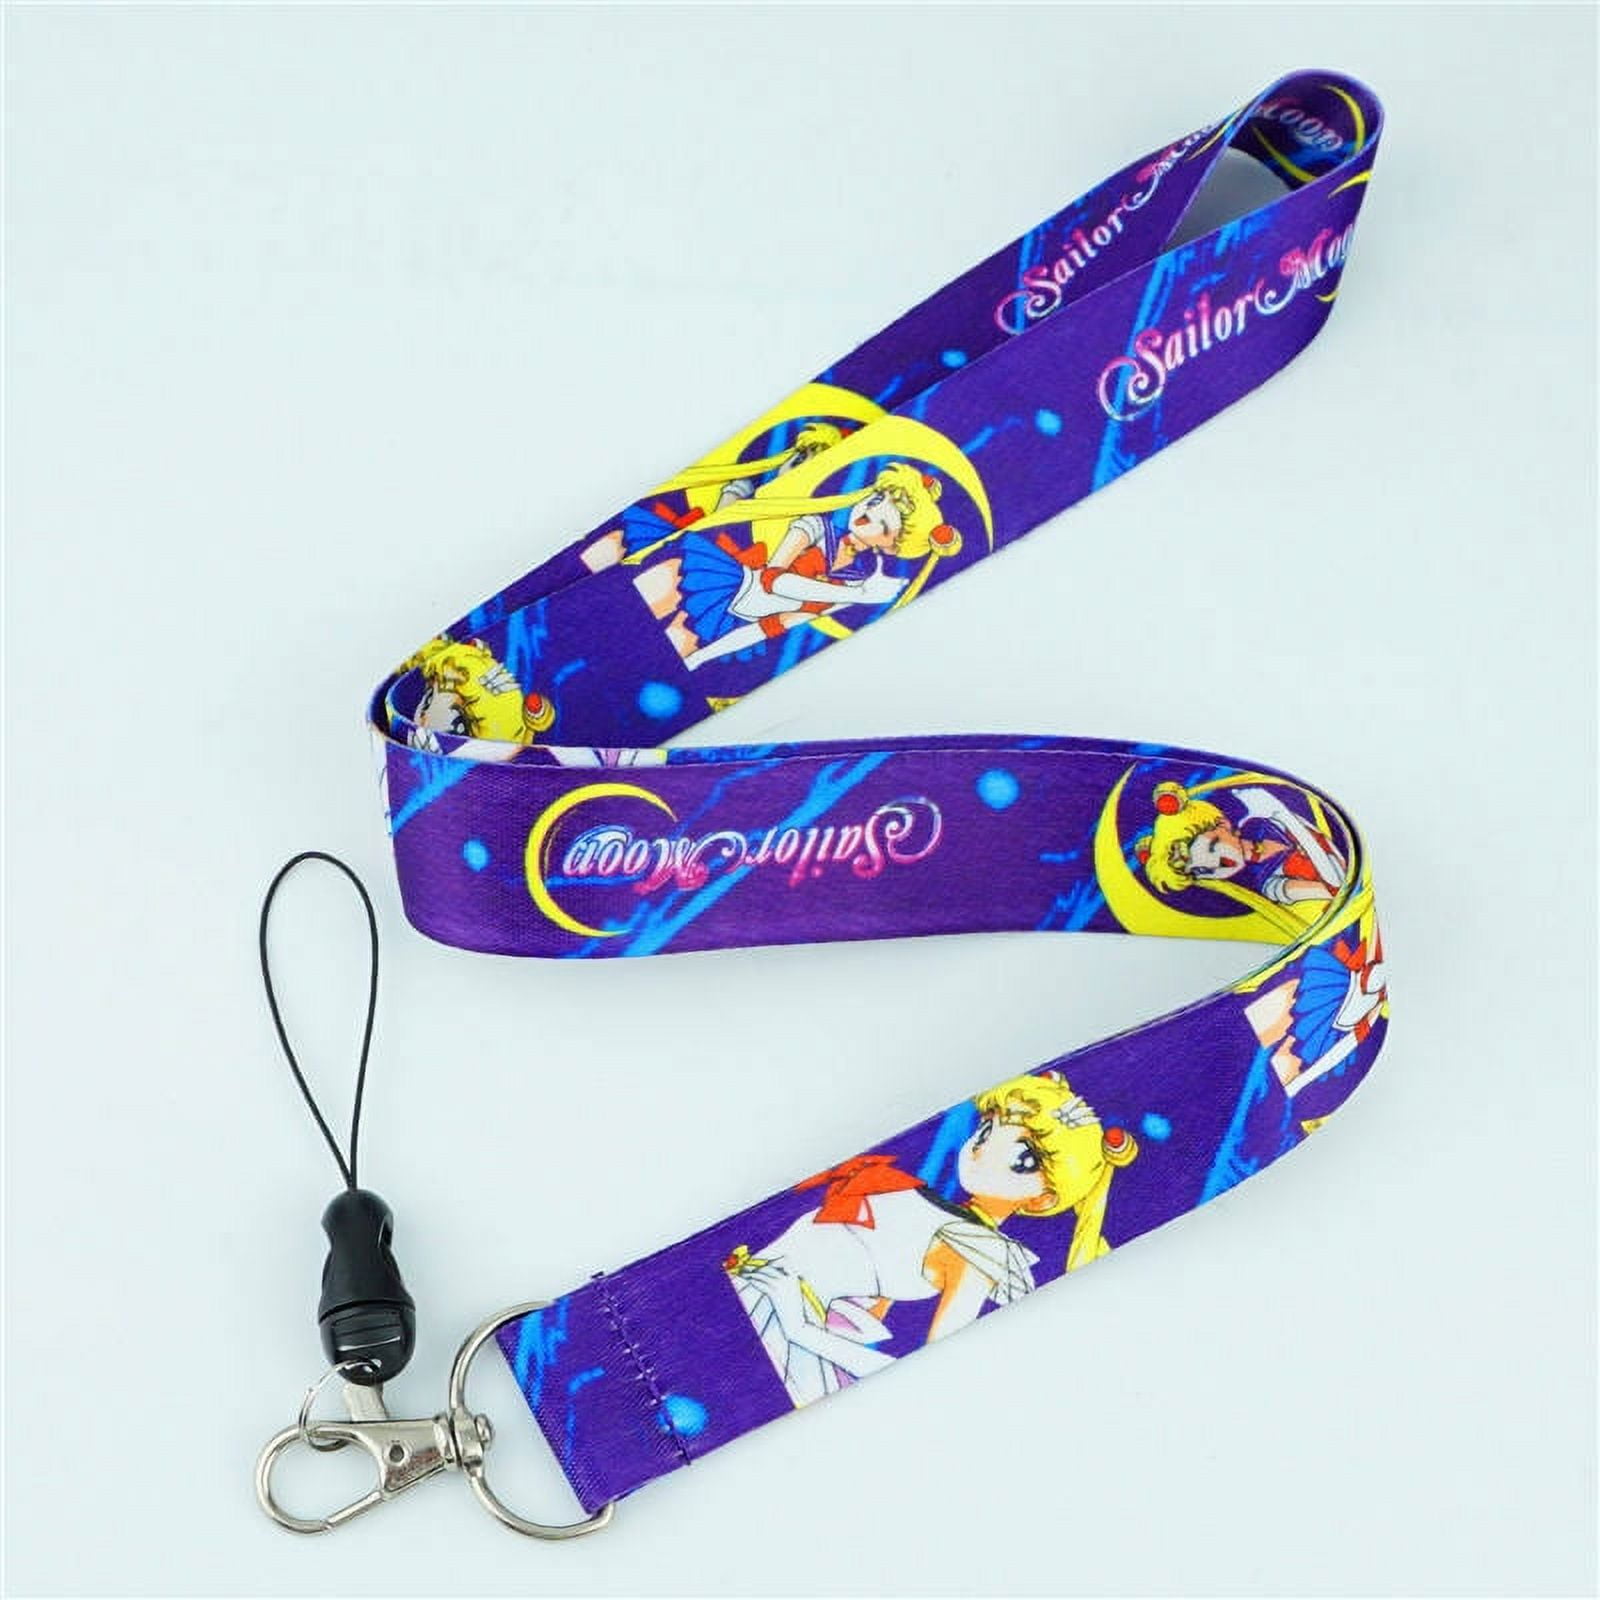 Wholesale Japan Anime Sailor Moon Lanyard Neck Strap Clip Black Stripe For  Car Key ID Card Mobile Phone Badge Holder From Sunrise888, $0.48